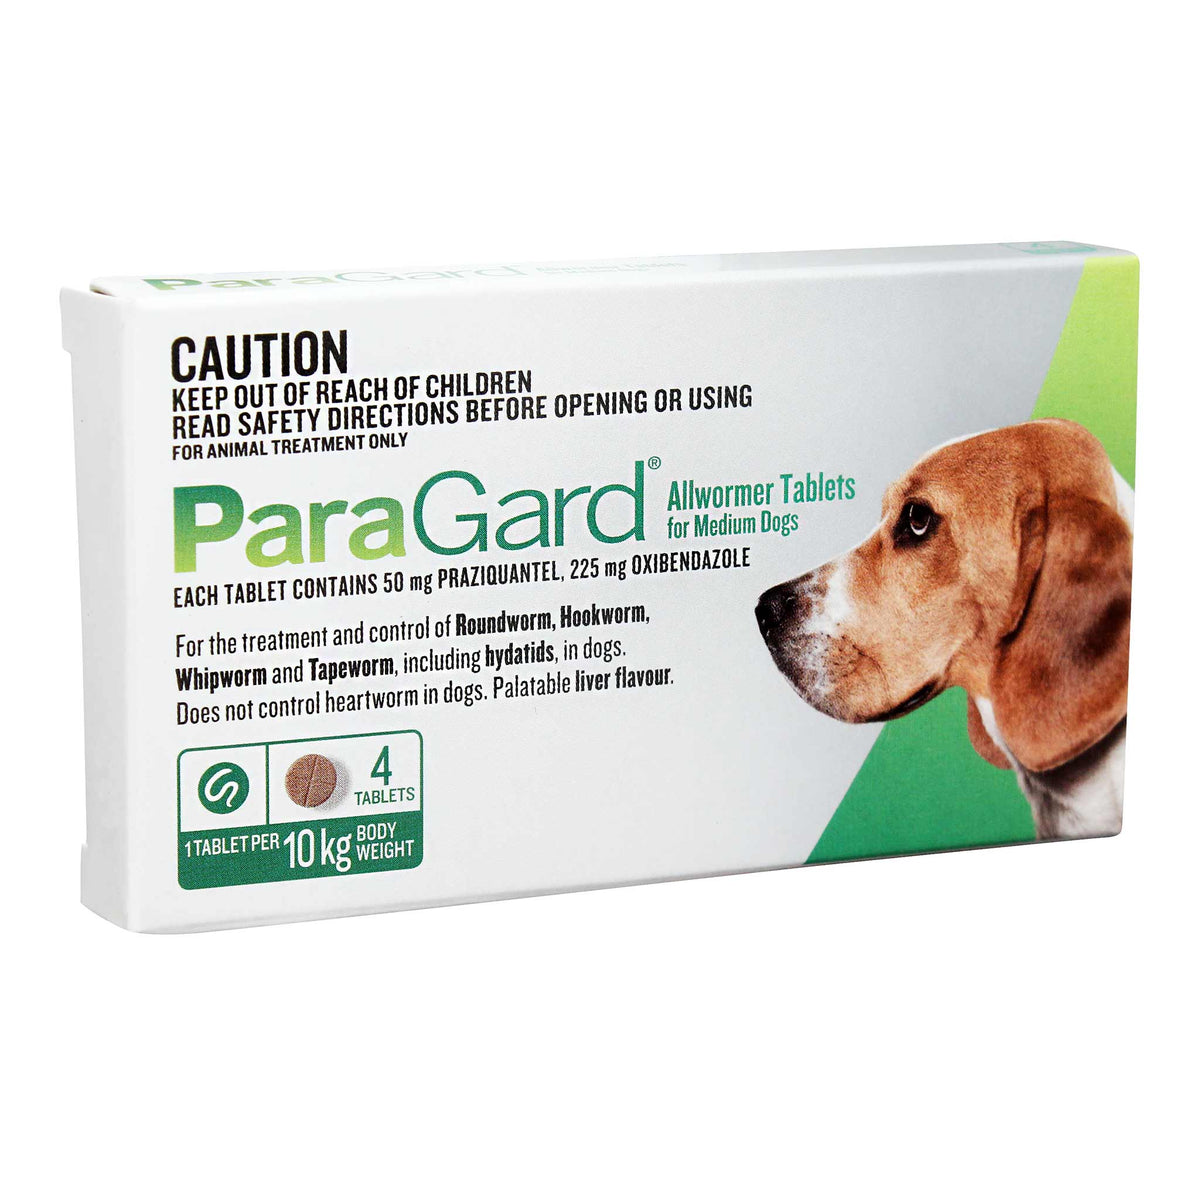 ParaGard Allwormer Tablets for Medium Dogs